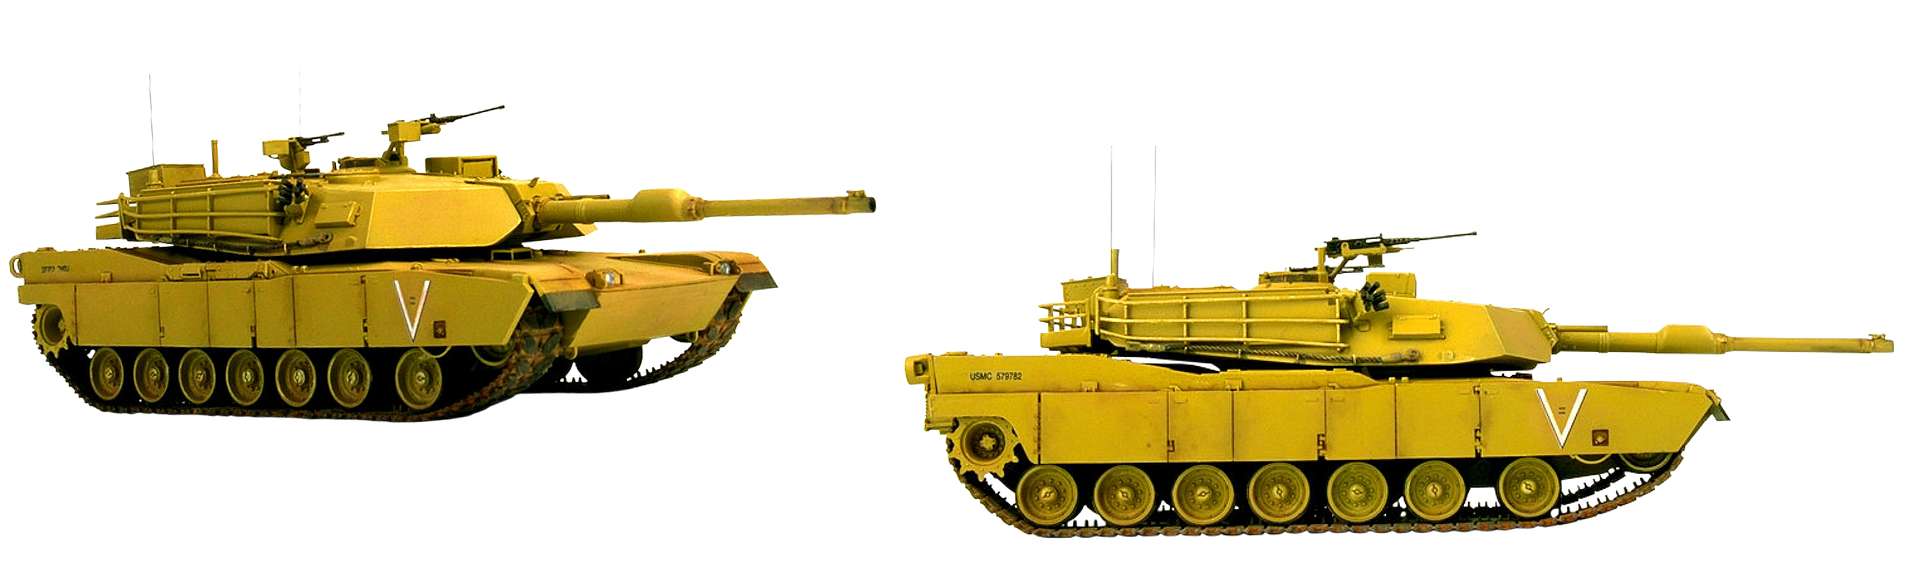 A Yellow Tank With A Gun